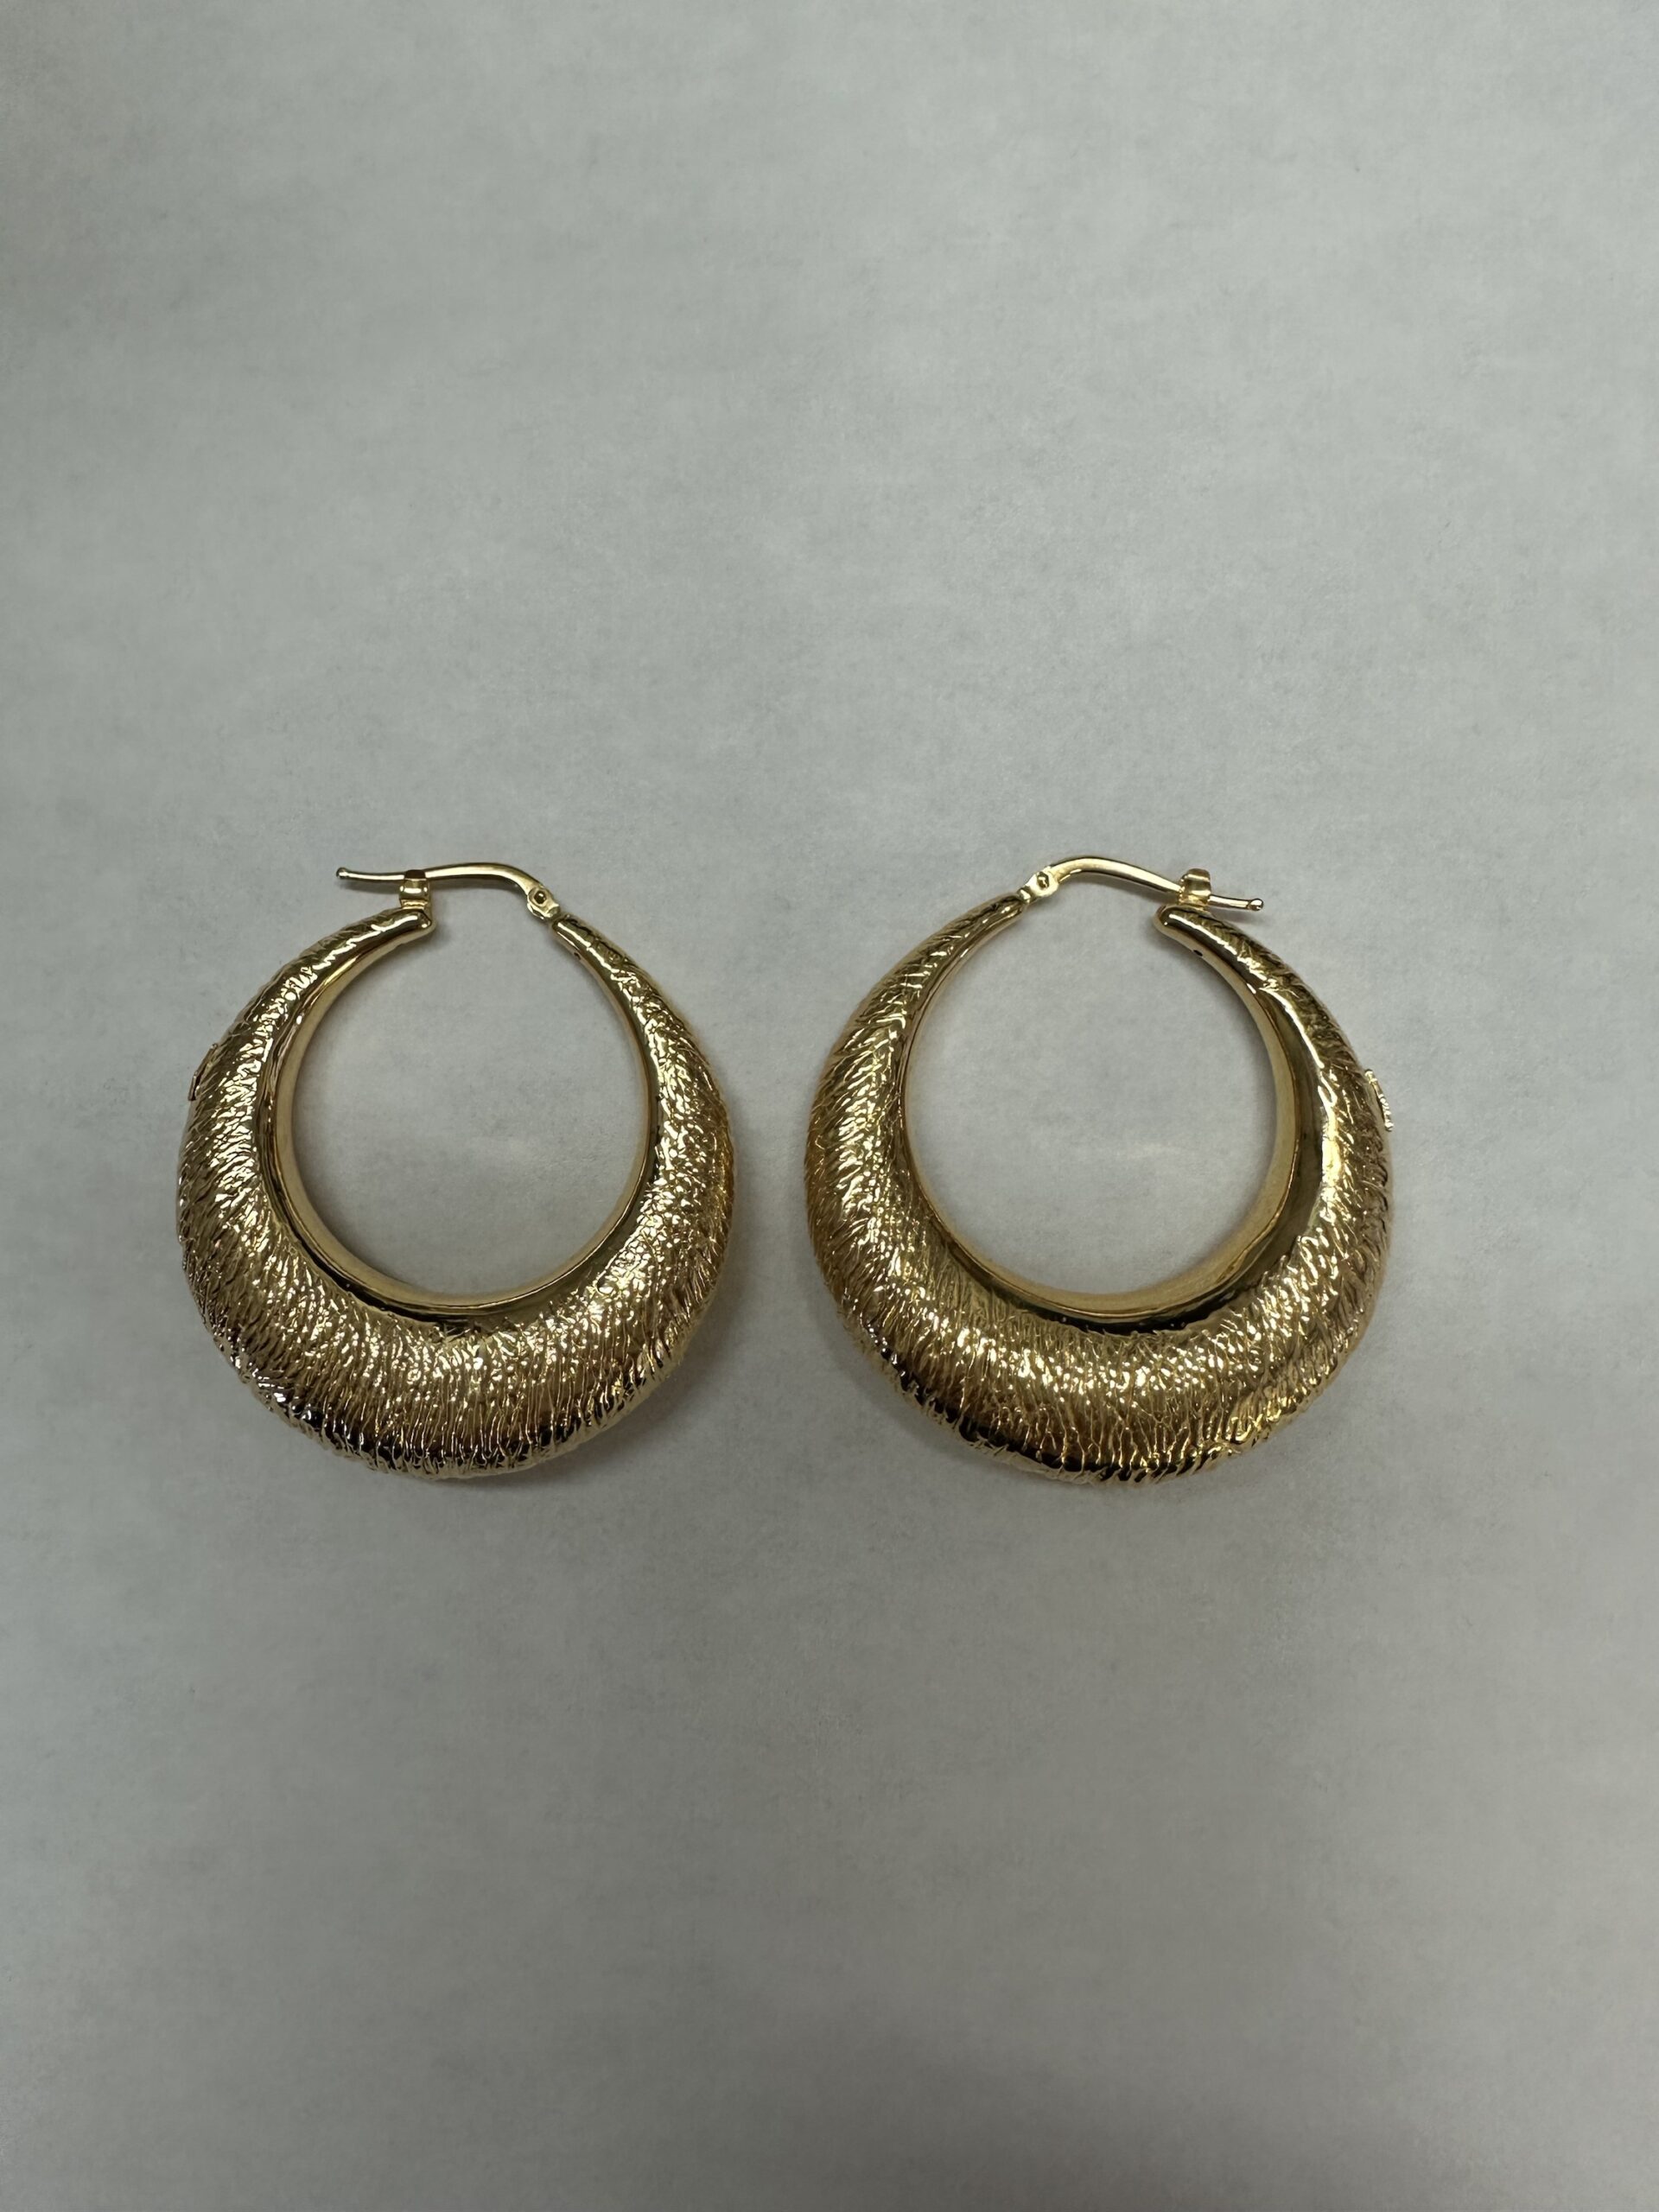 14k Genuine Yellow Gold 1.5 INCH Round Hoop Earrings (40MM) - Walmart.com